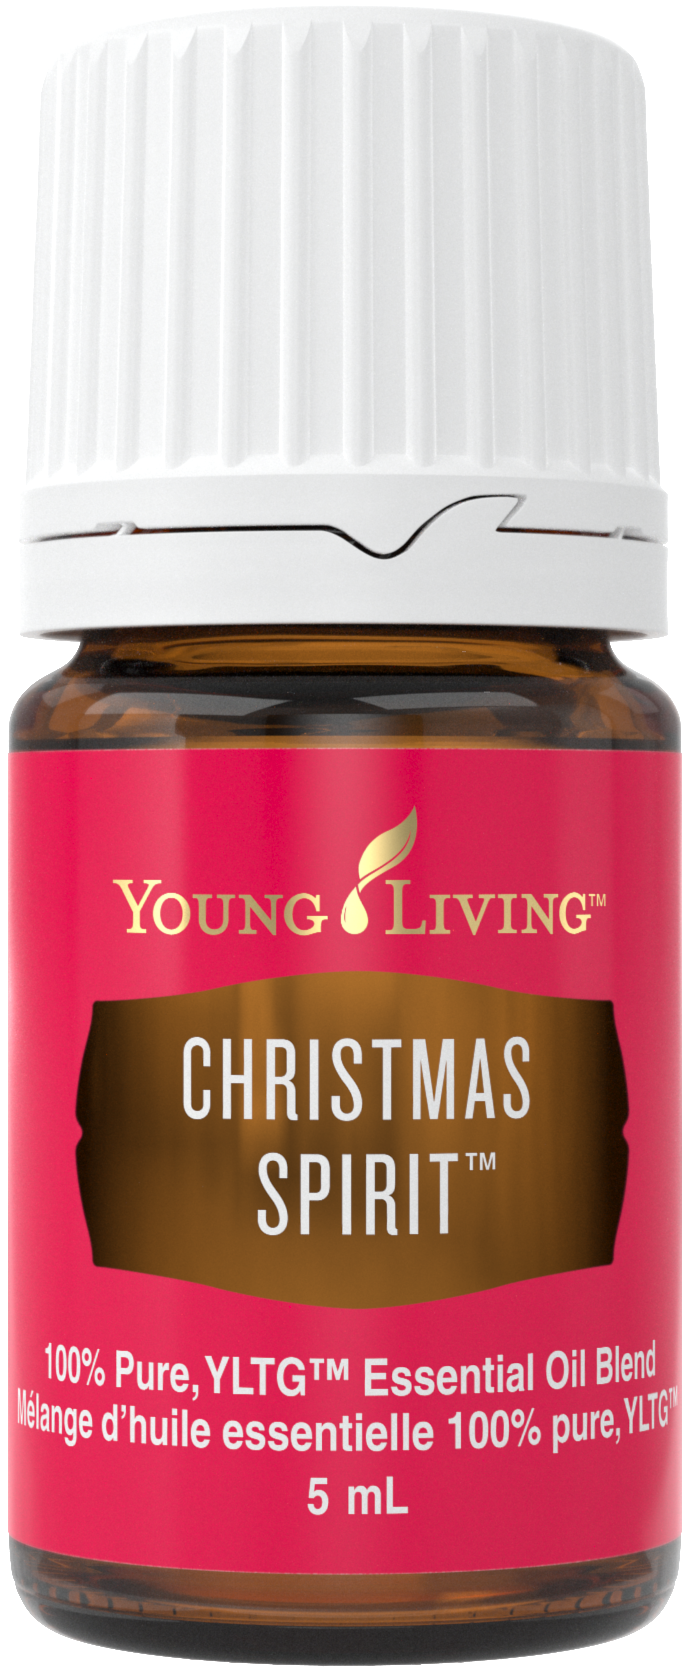 YL - Essential Oil Blend - Christmas Spirit